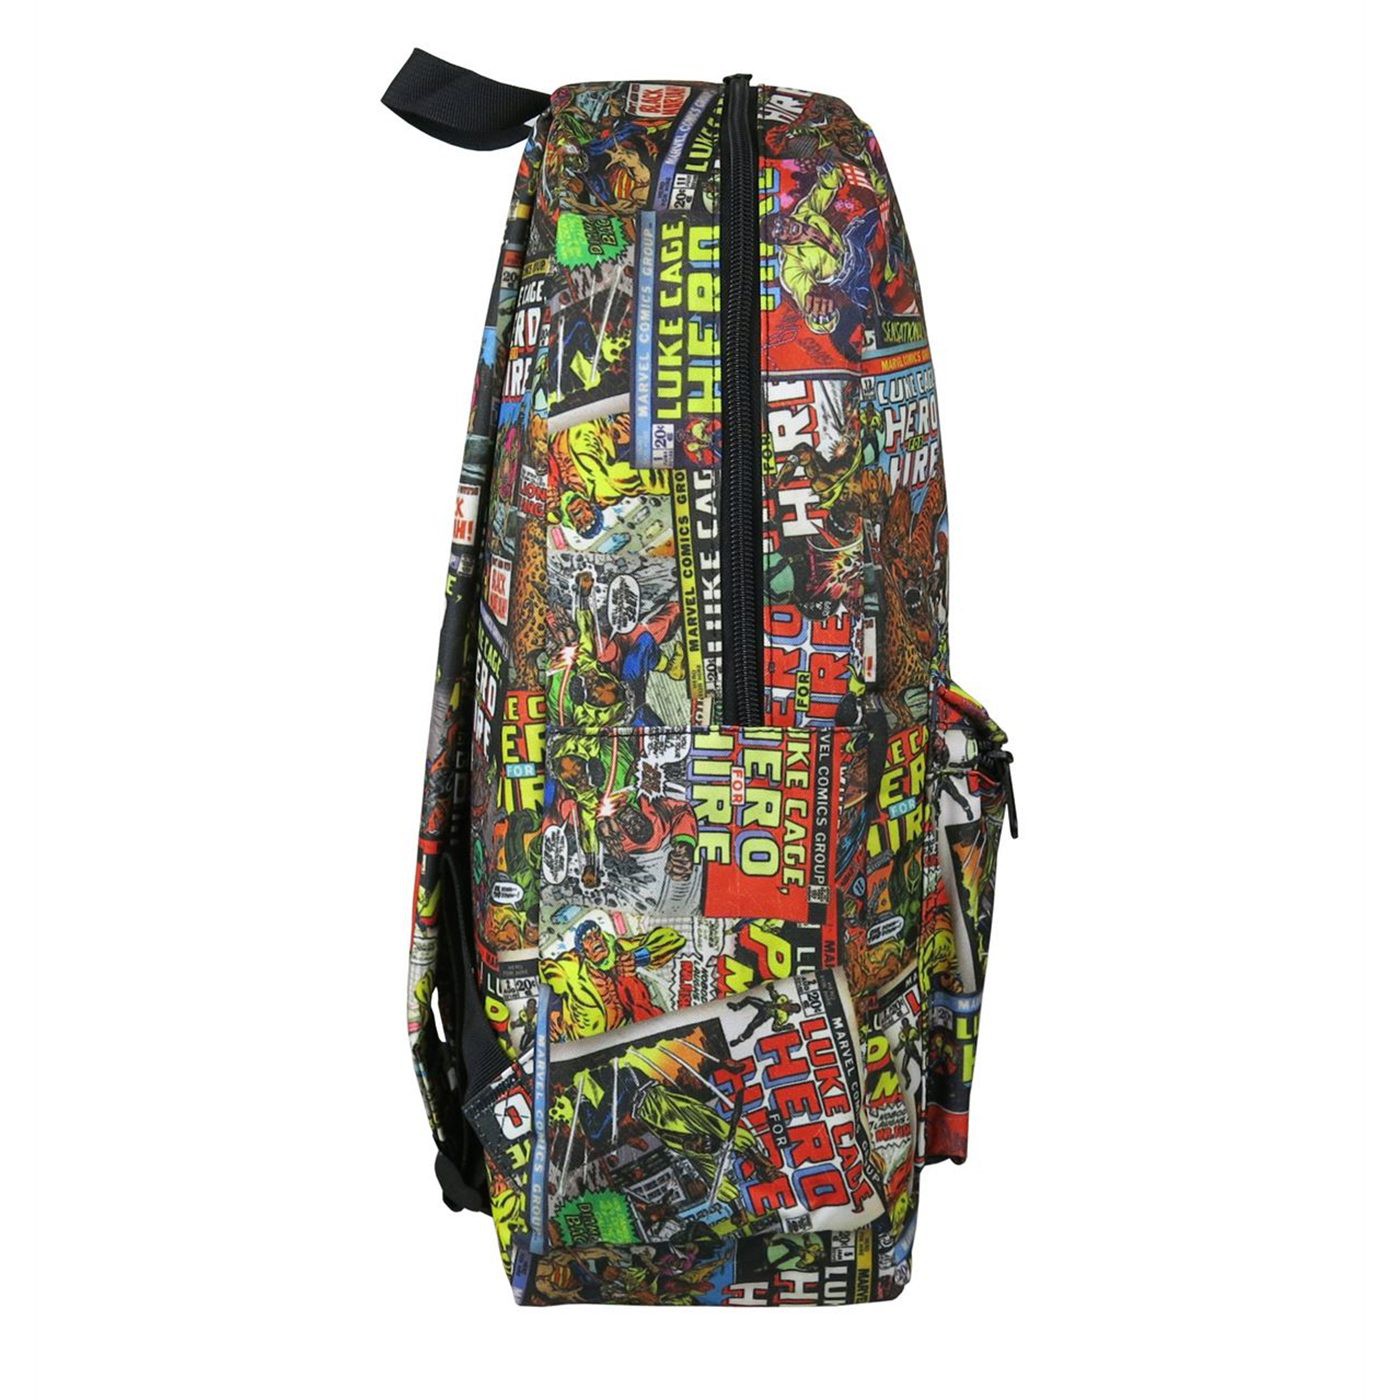 Luke Cage Comic Cover Mosaic Backpack